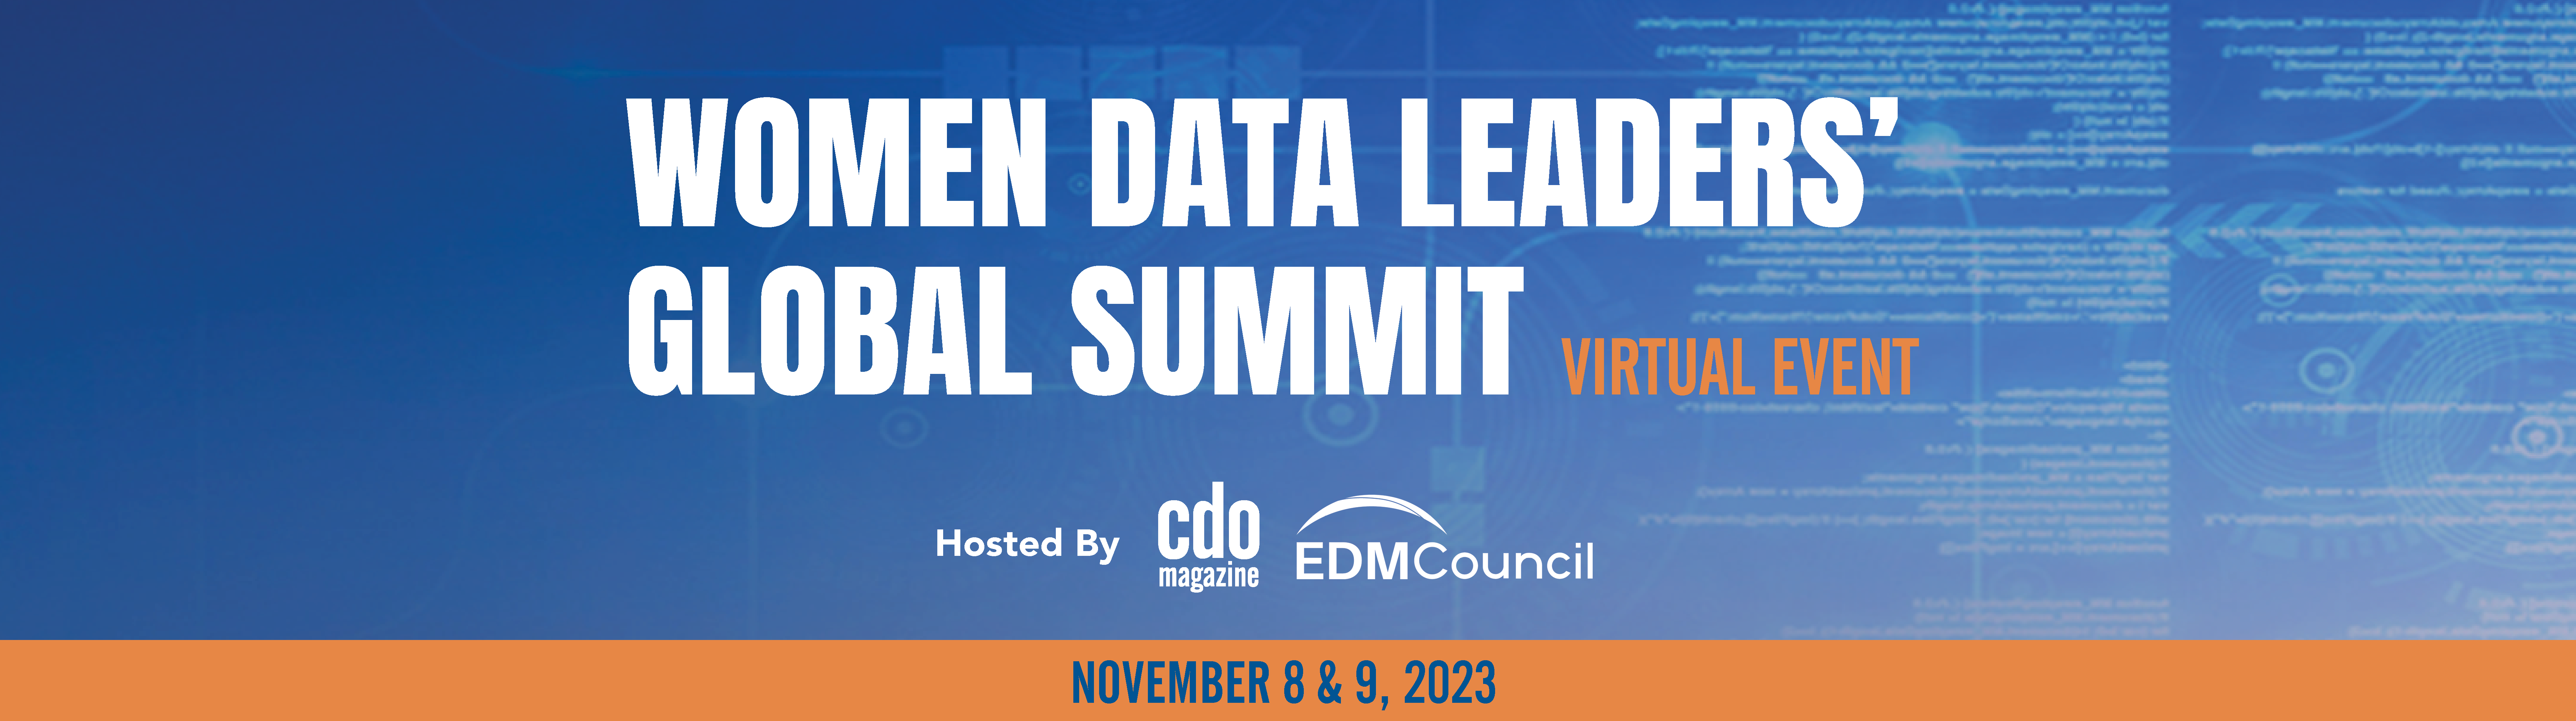 Women Data Leaders Global Summit